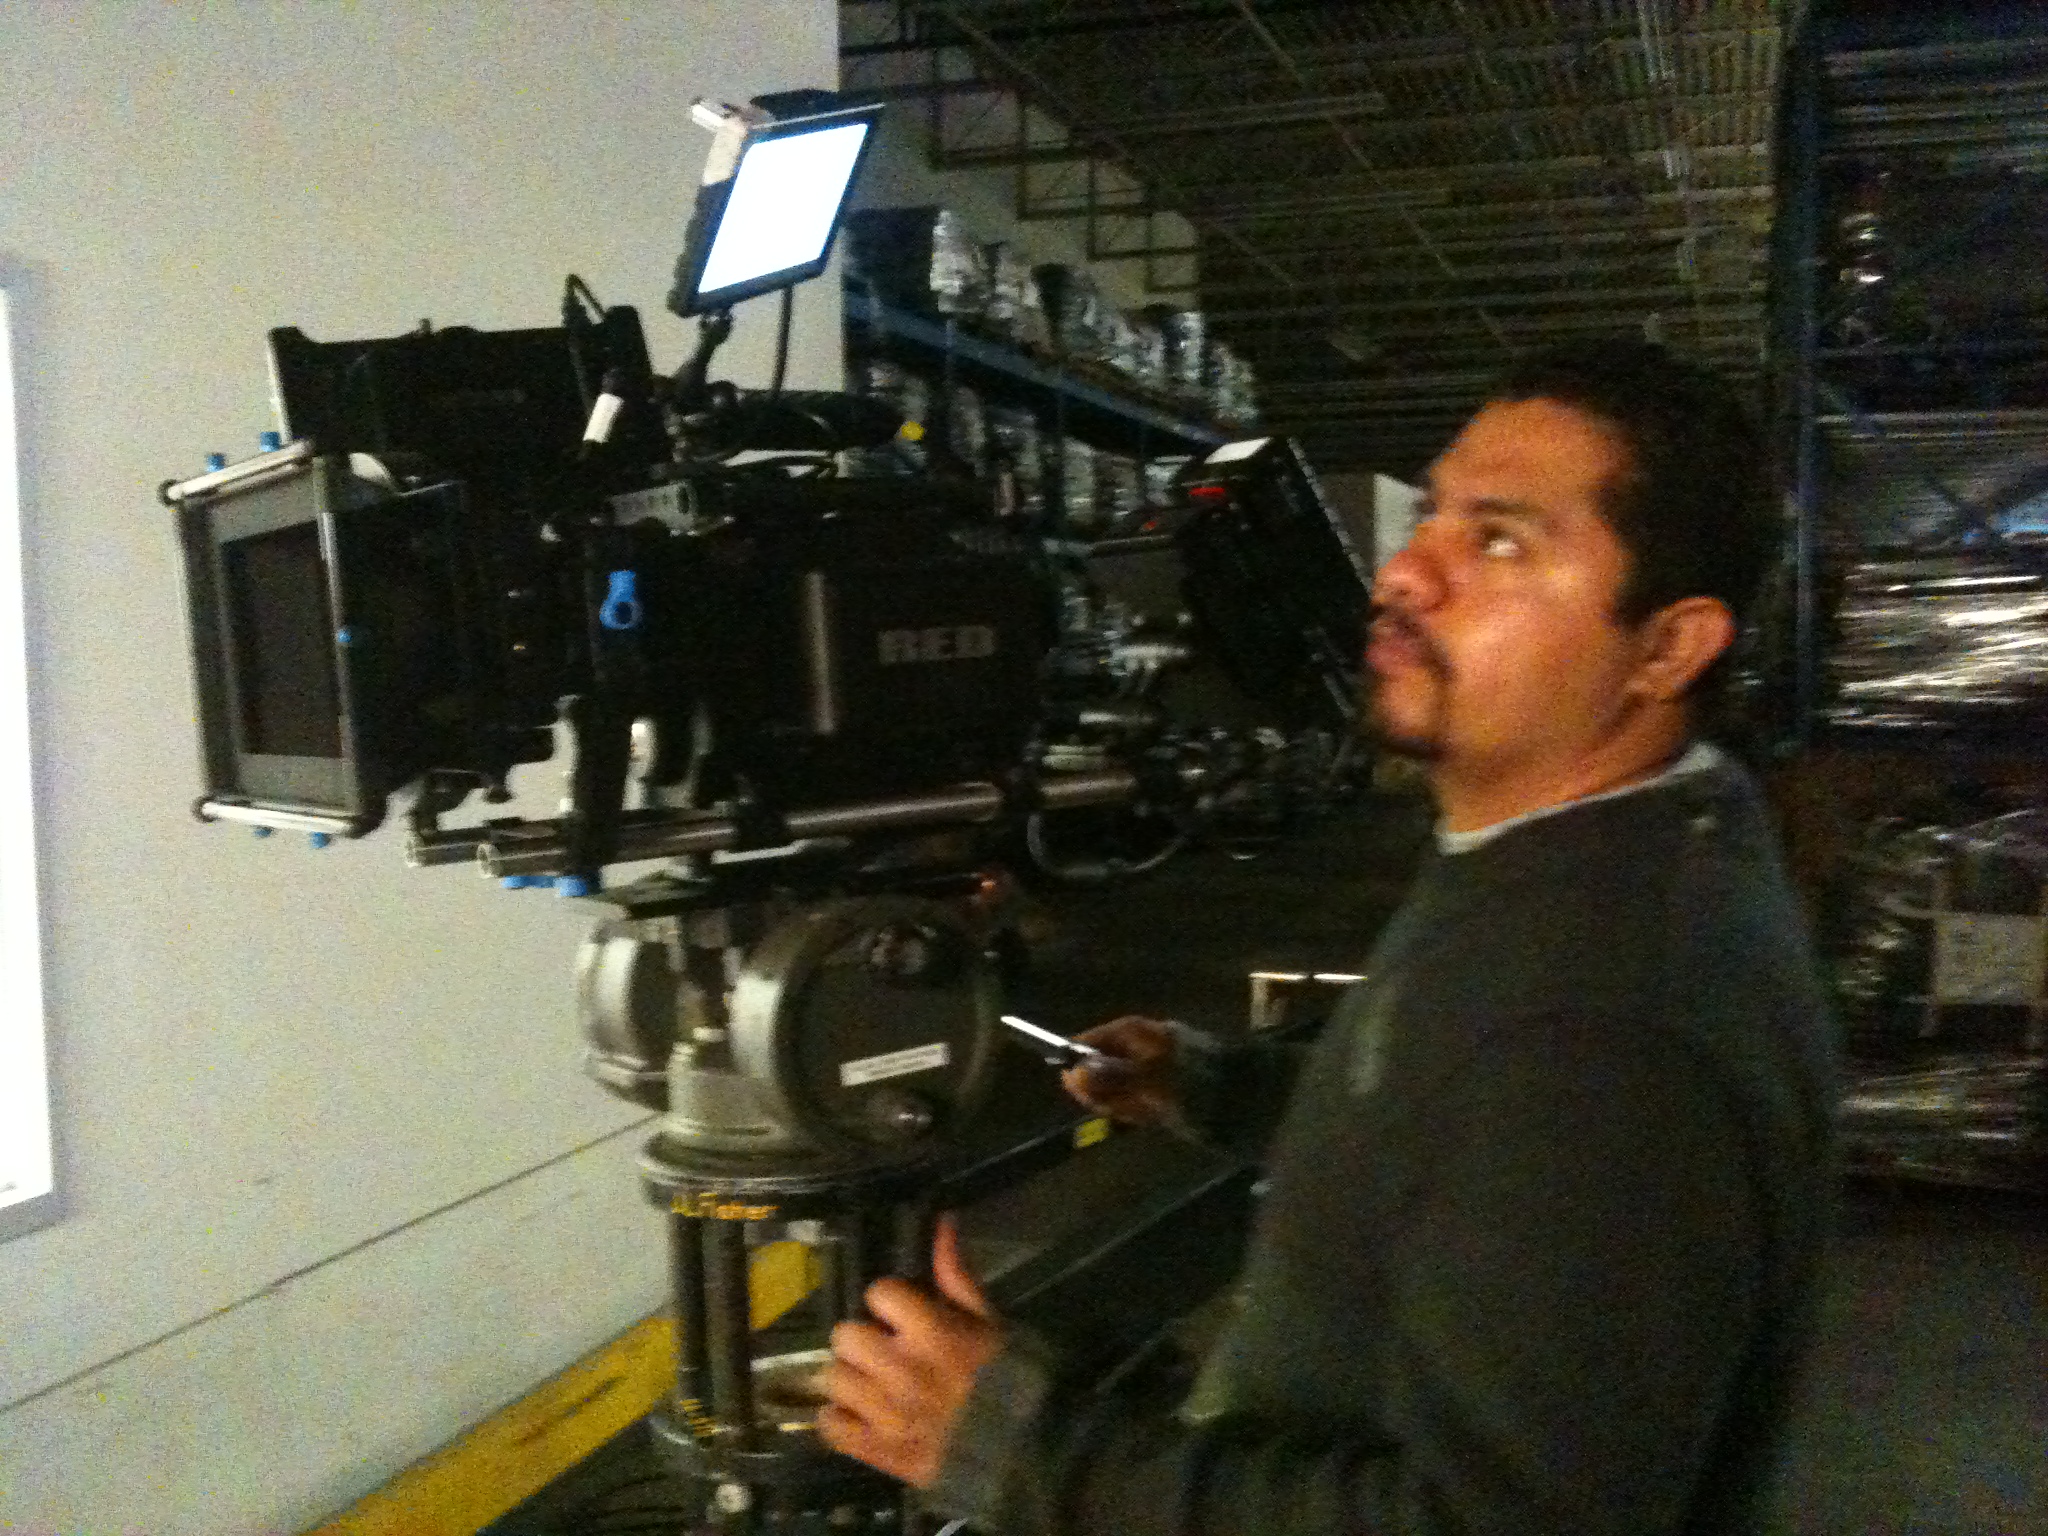 Gabriel Medina on set 